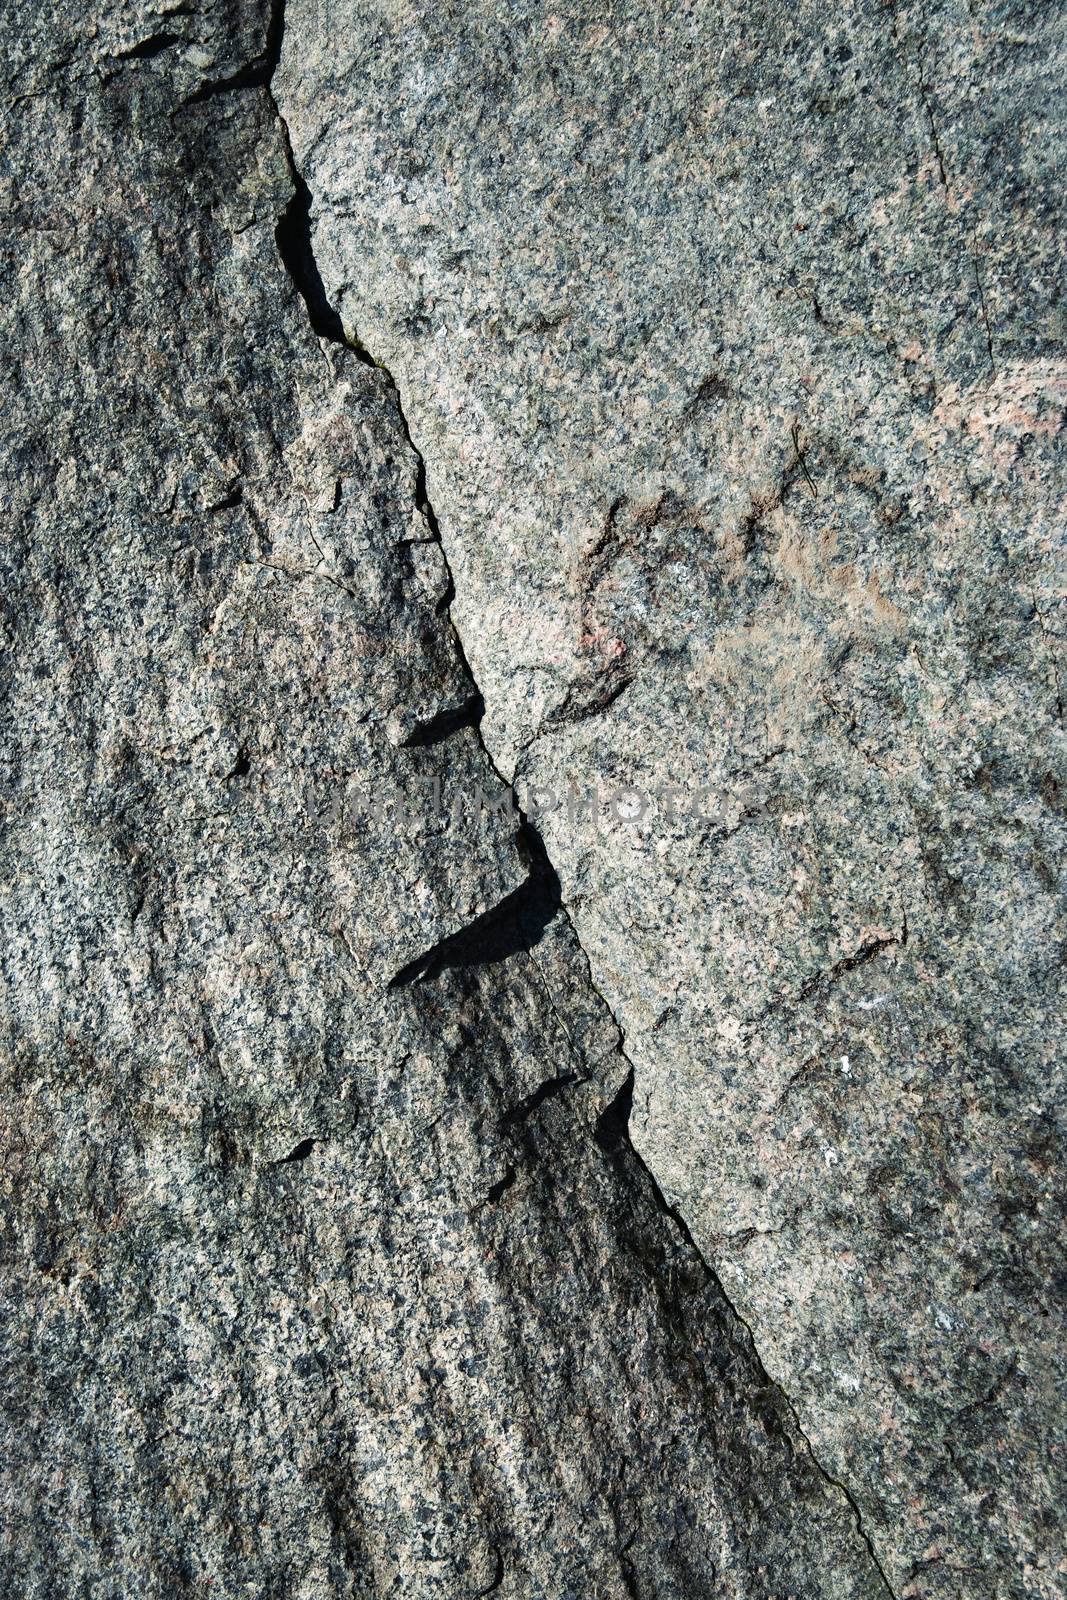 crack on granite rock by Ahojdoma